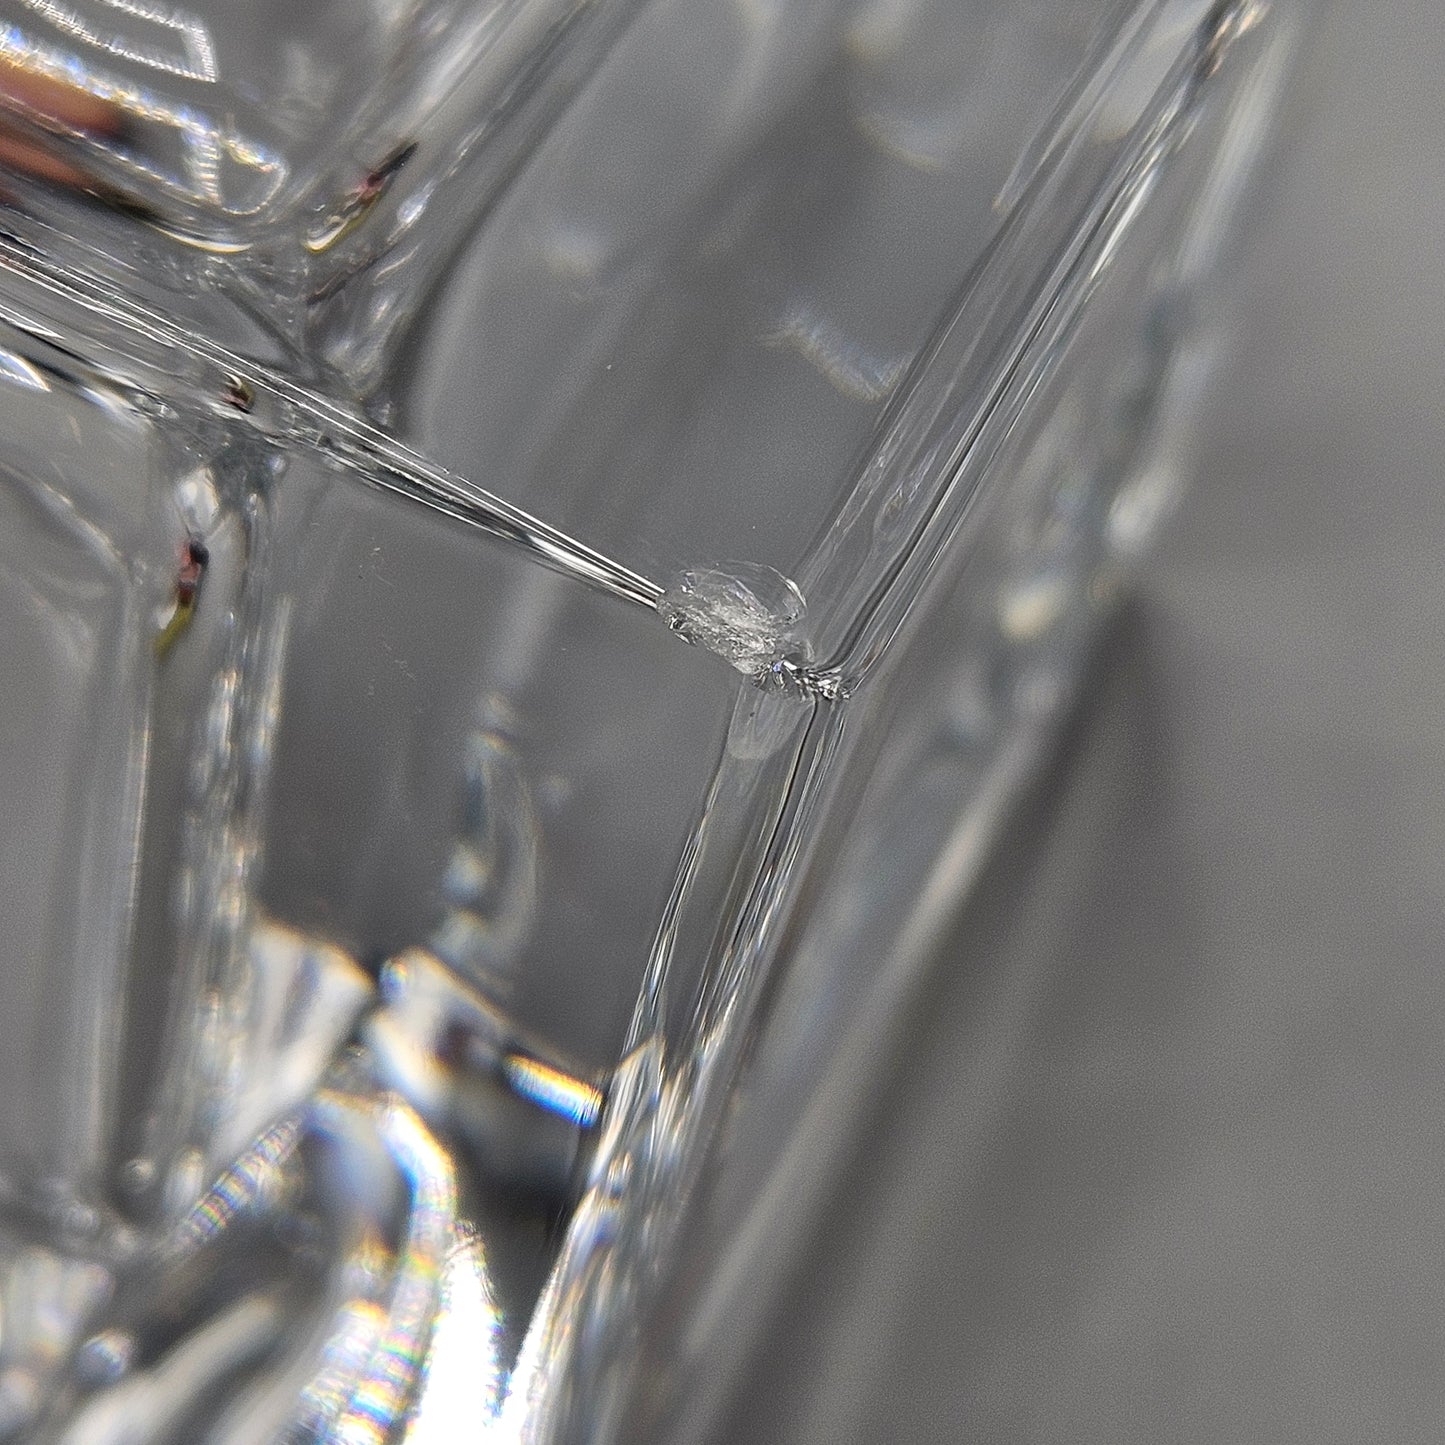 Shannon Crystal “Designs Of Ireland” Czech Republic Crystal Decanter